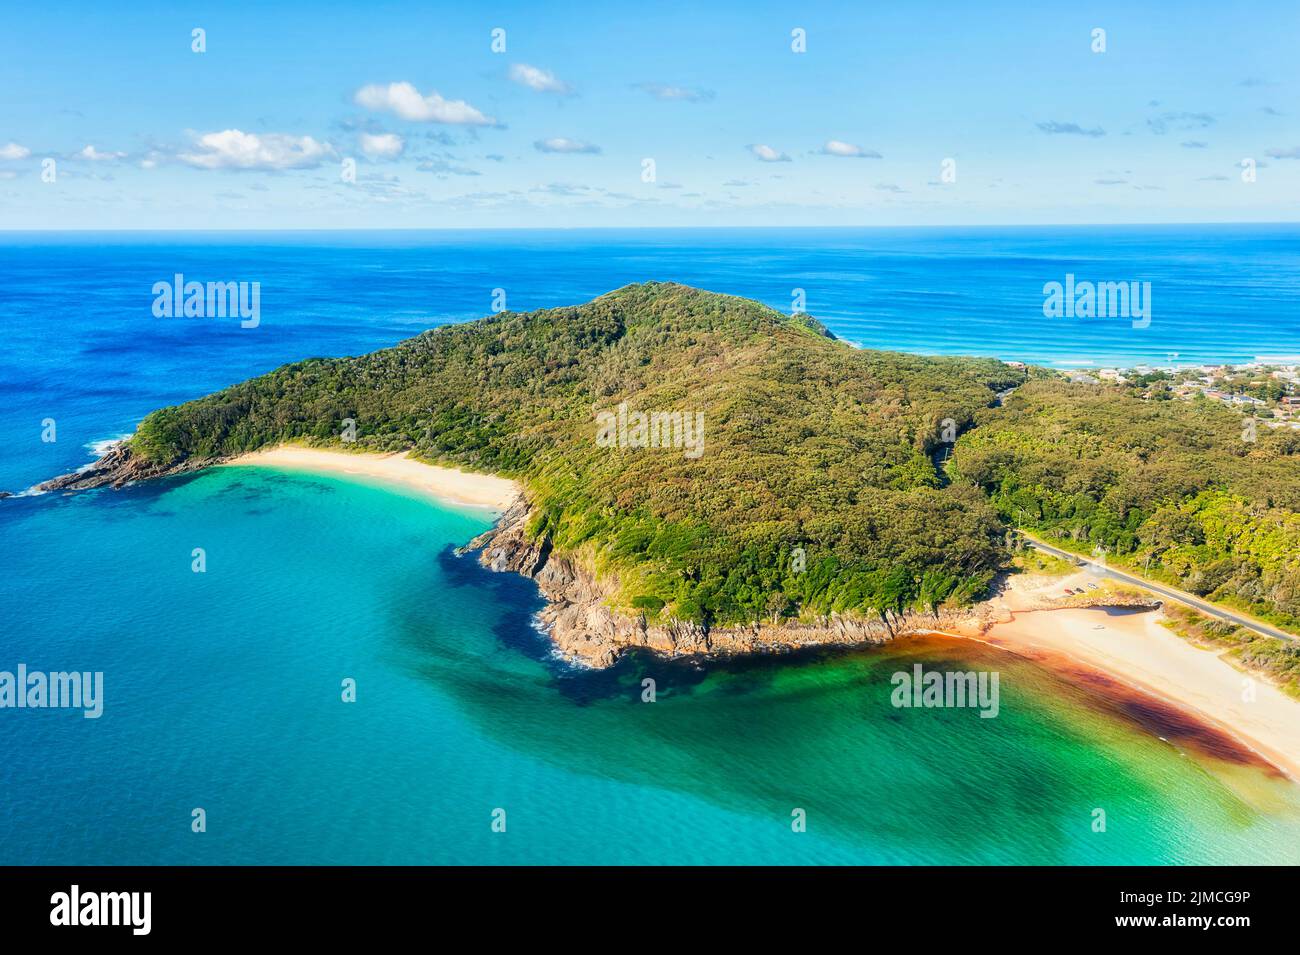 Seagull point headland in Elizabeth beach town of Australia on Pacific coast - scenic aerial tropical seascape. Stock Photo